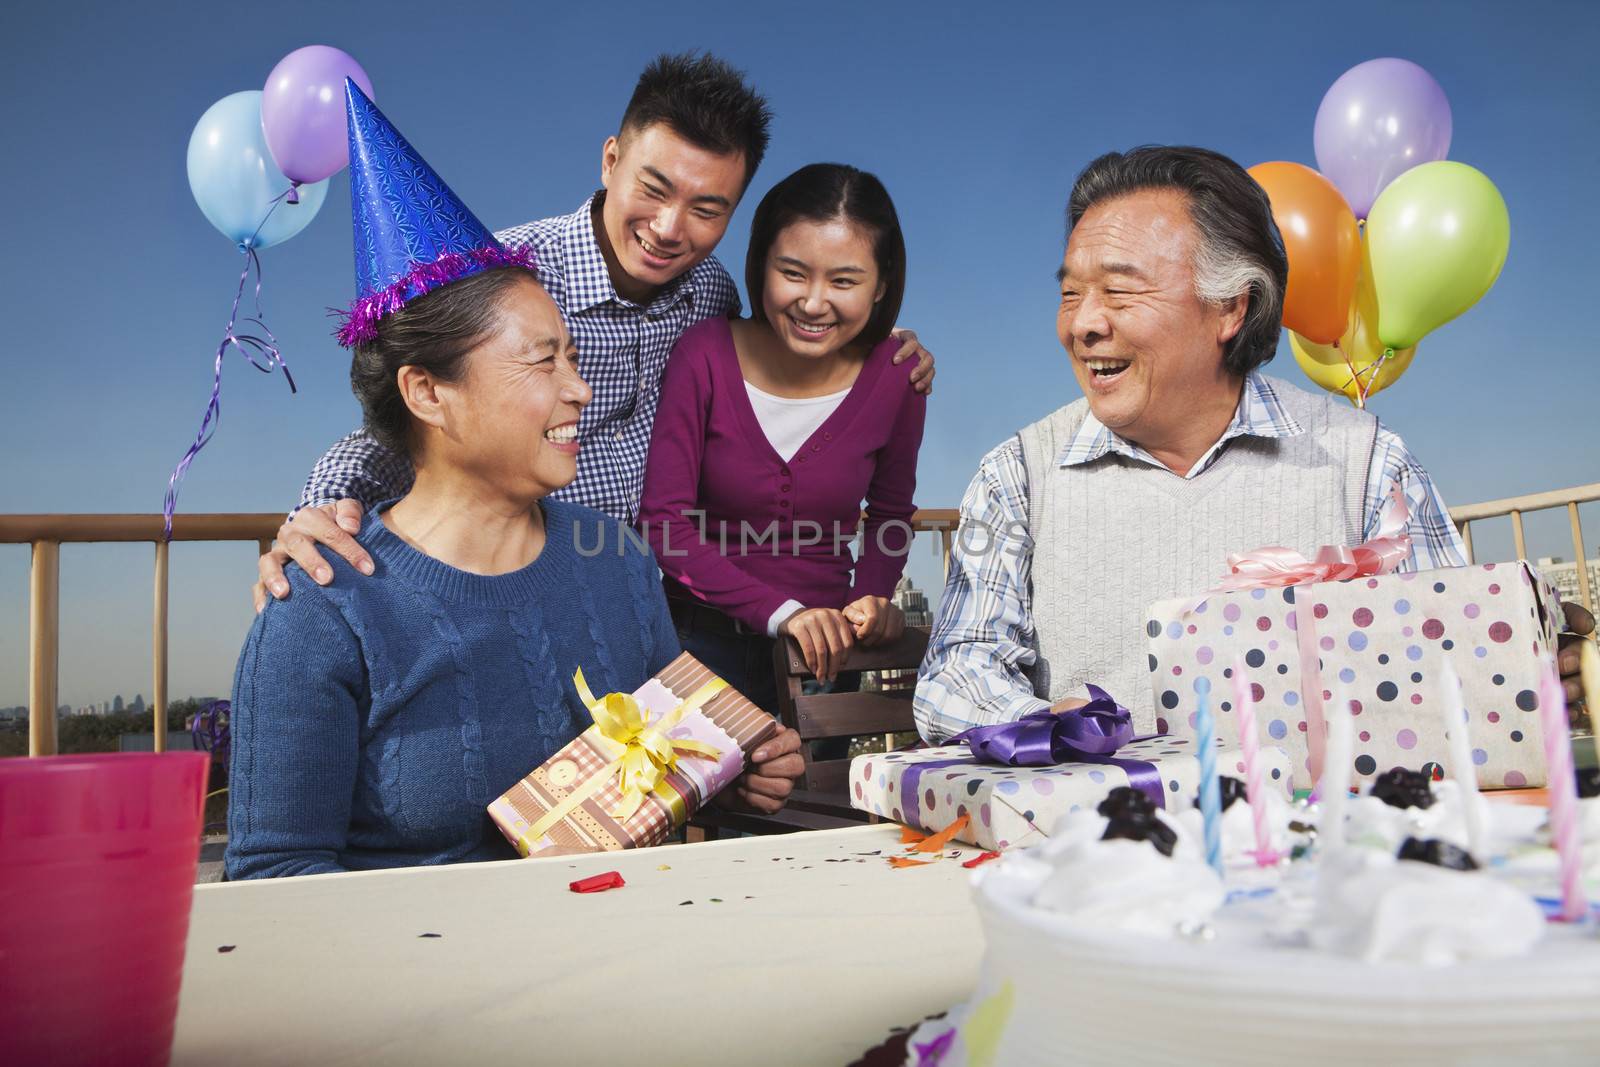 Family celebrating mum's birthday